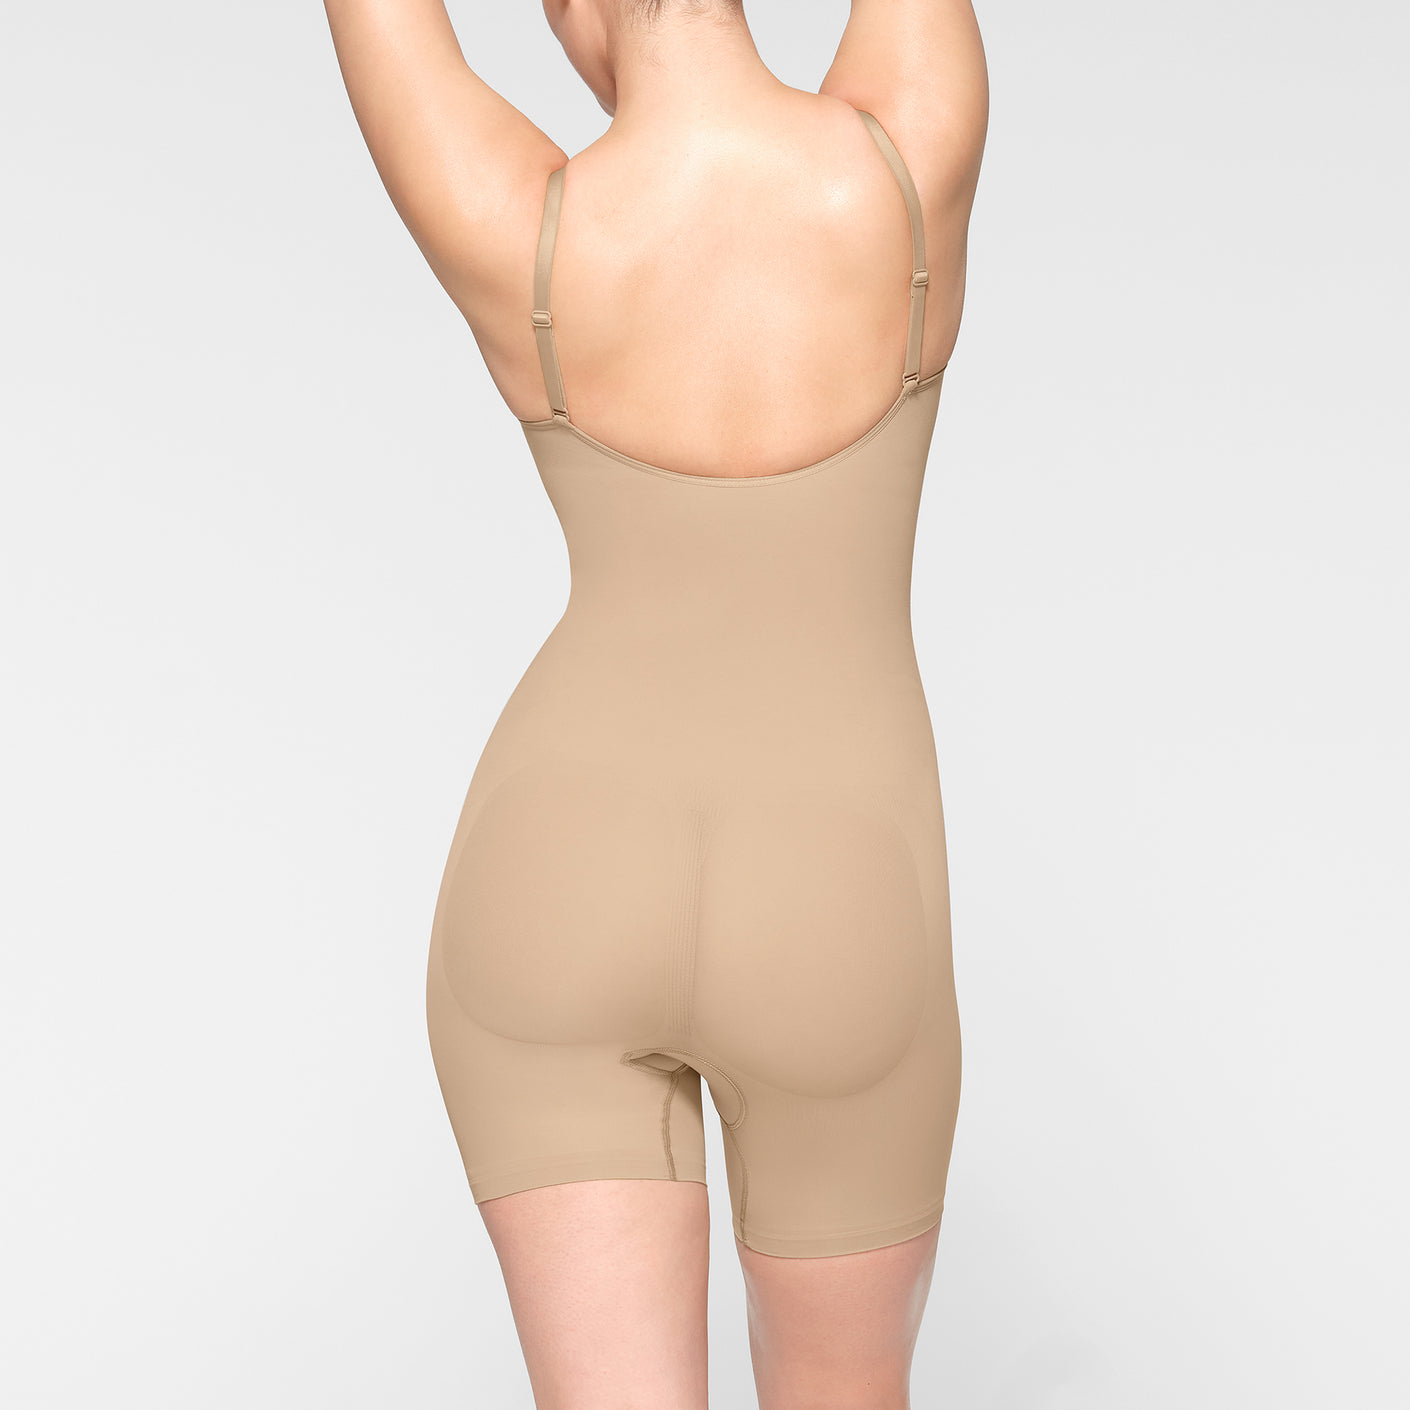 Generic BBodysuit for Women, Tummy Control Shapewear, Seamless Sculpting  Body Shaper,Tank Top